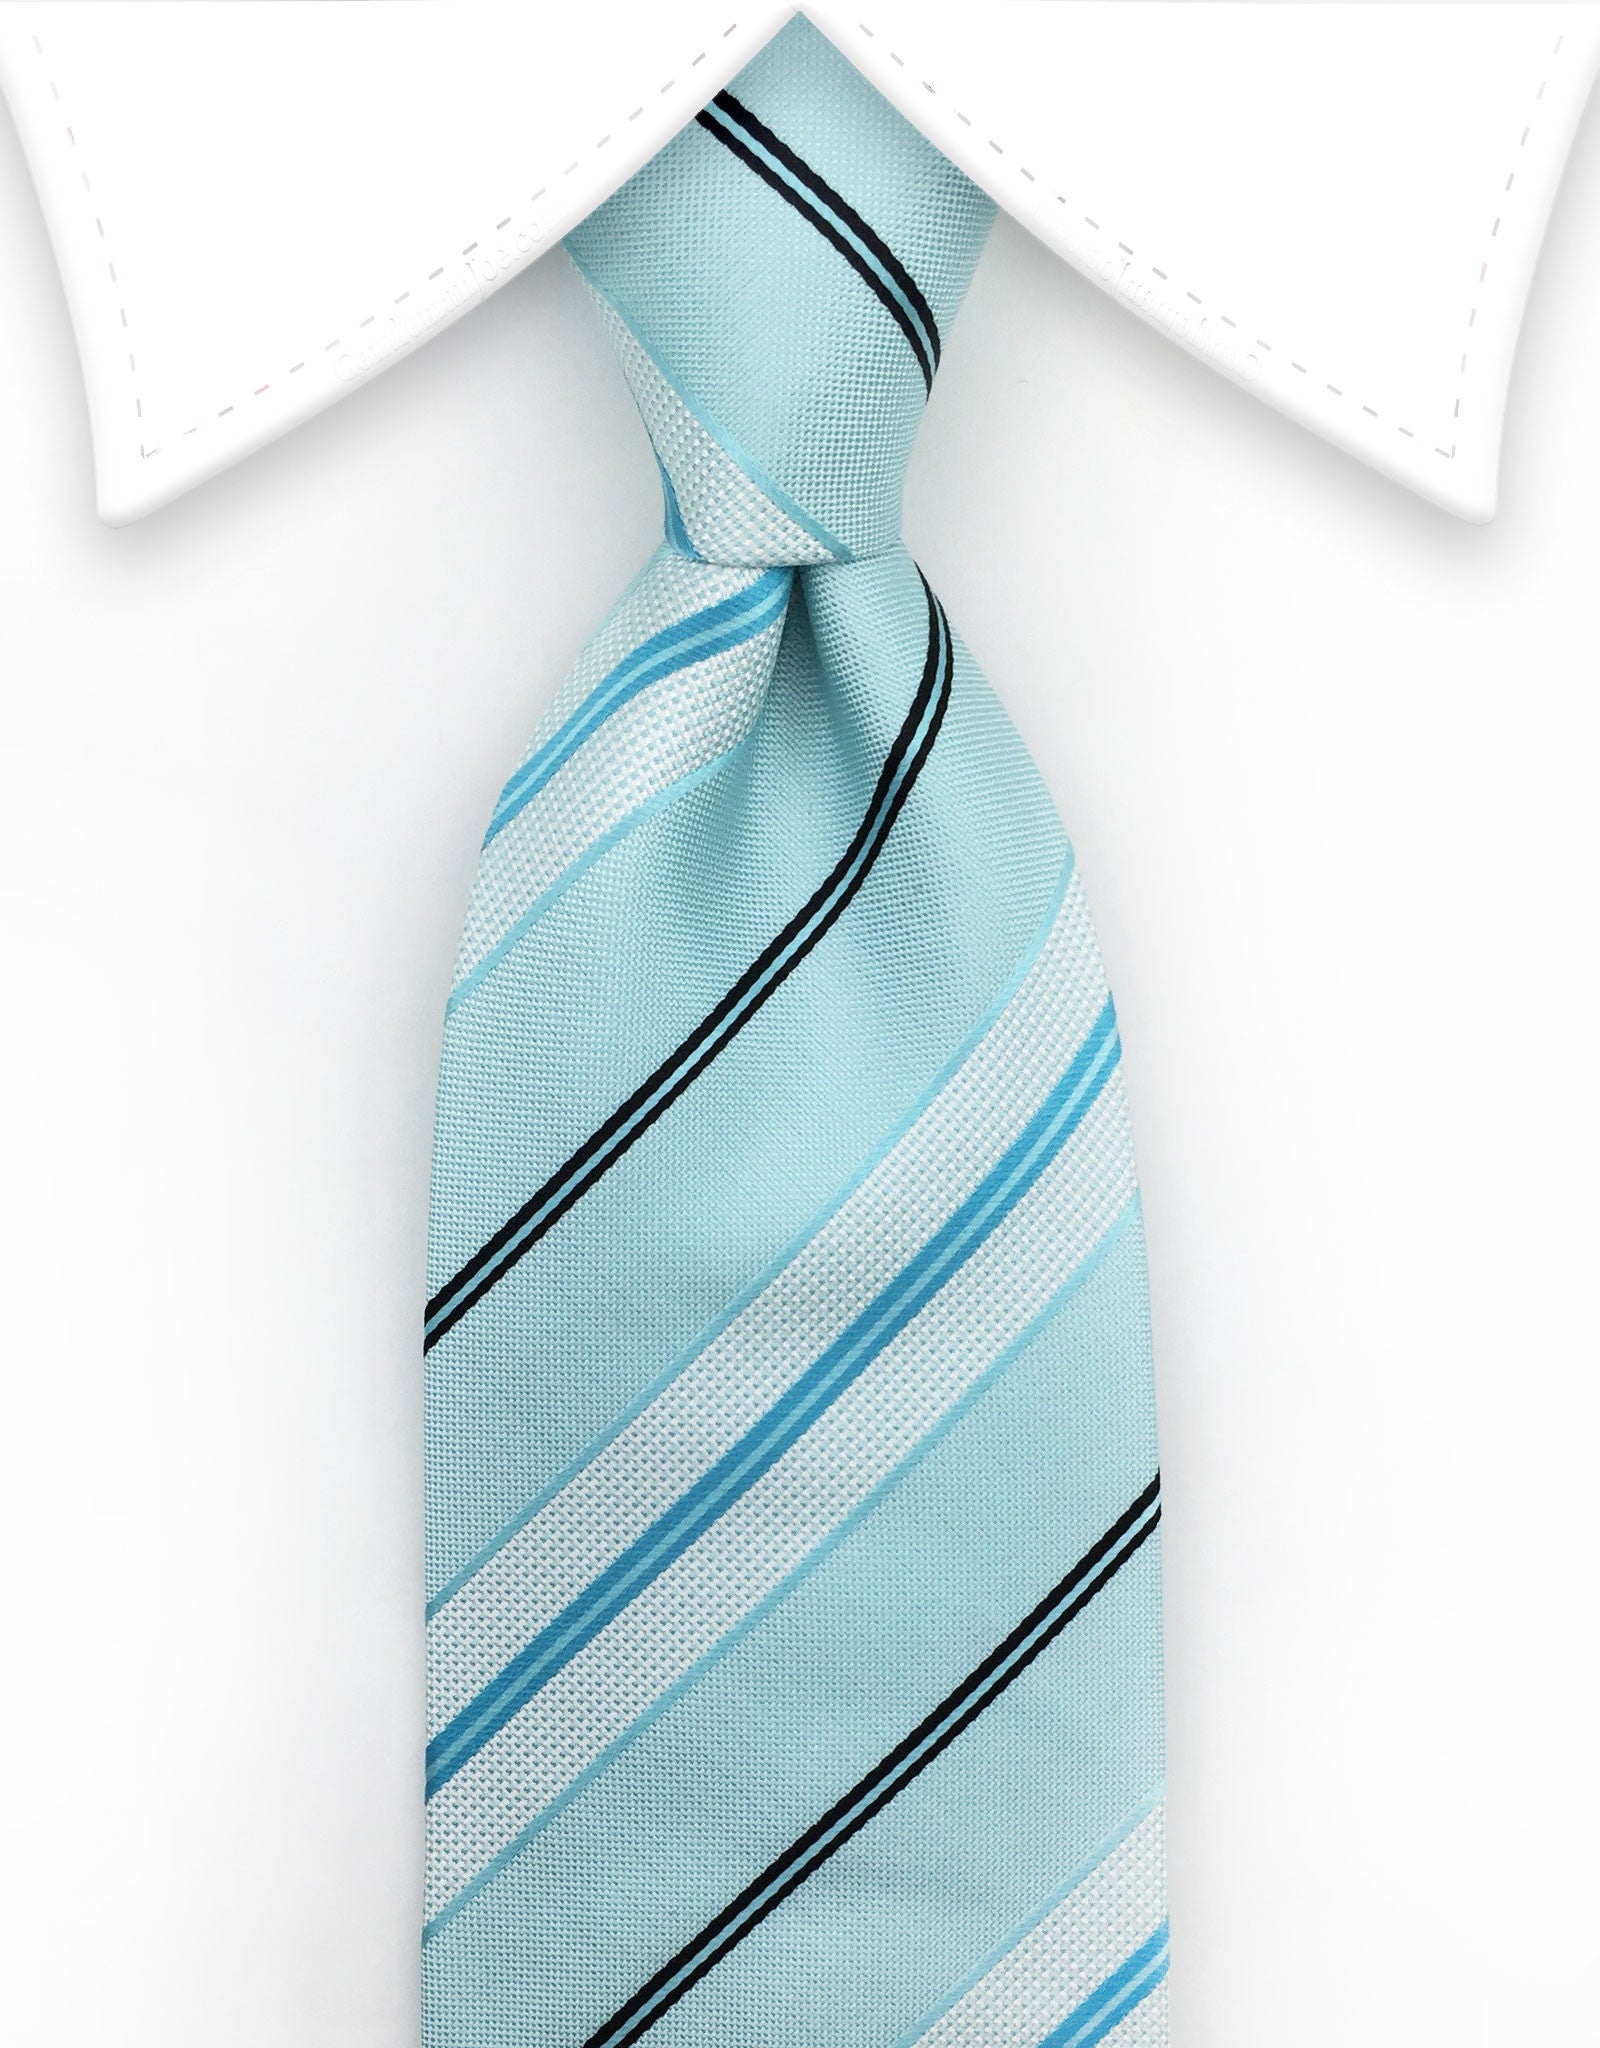 Aqua and Turquoise Striped Necktie